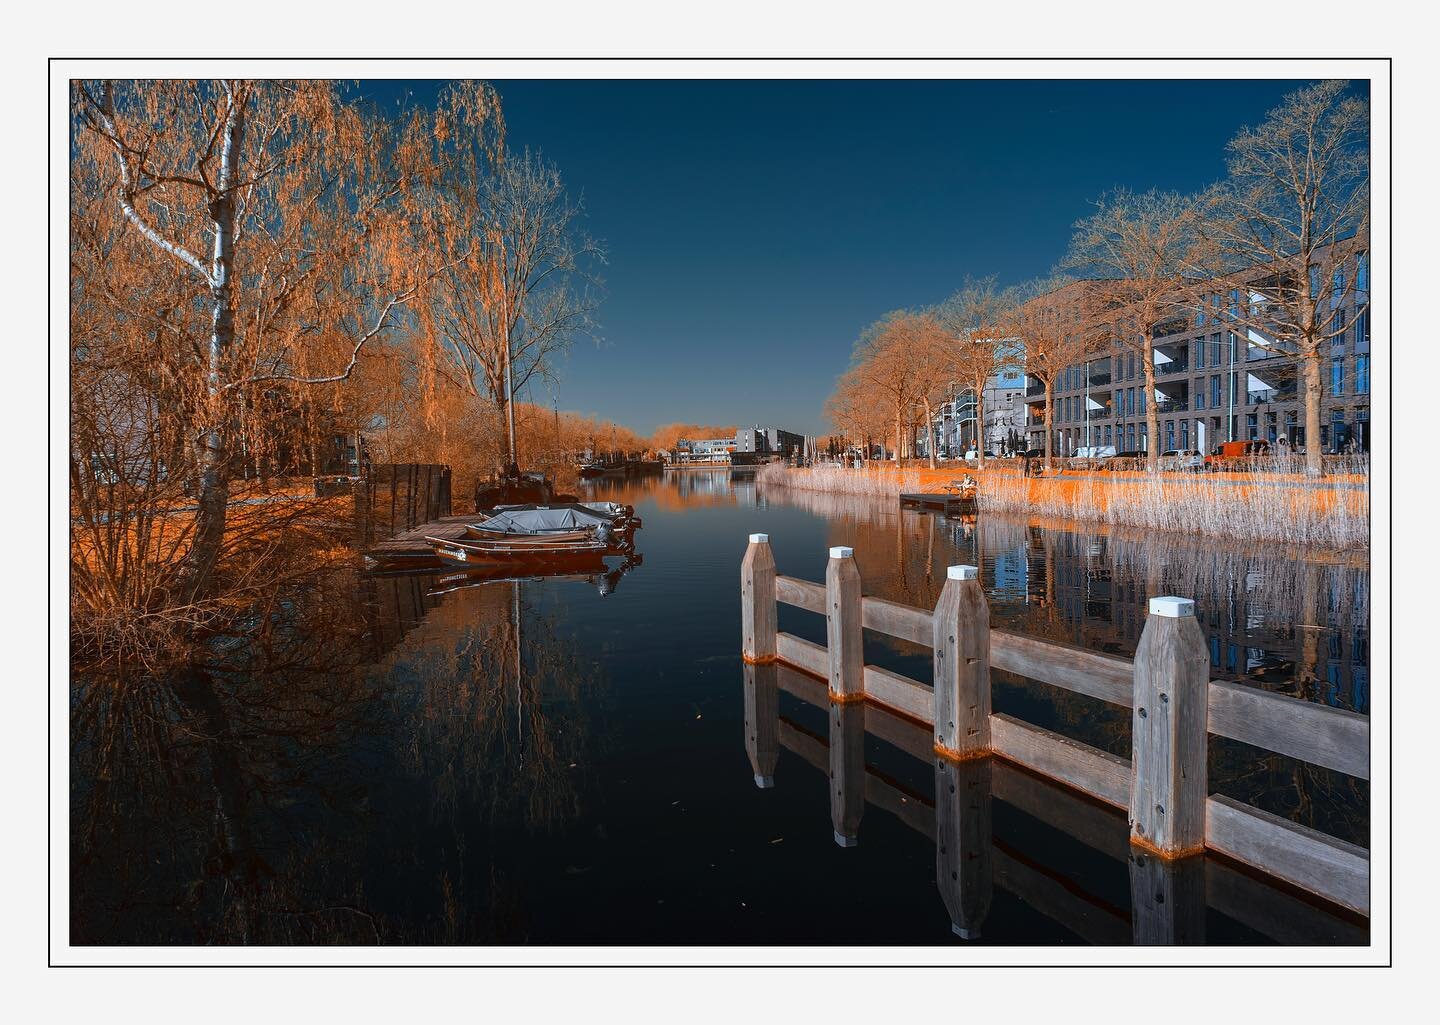 Full conversion infrared nikon D610 camera with 590Nm filter. 
Piushaven, Tilburg, Netherlands.
.
.
.
.
.
.

#tilburg #infrarednikon #NoordBrabant #Netherlands
#netherlands #infrared #ir #590 #590nm #fullconversion #conversion #infraredconvertedcamer